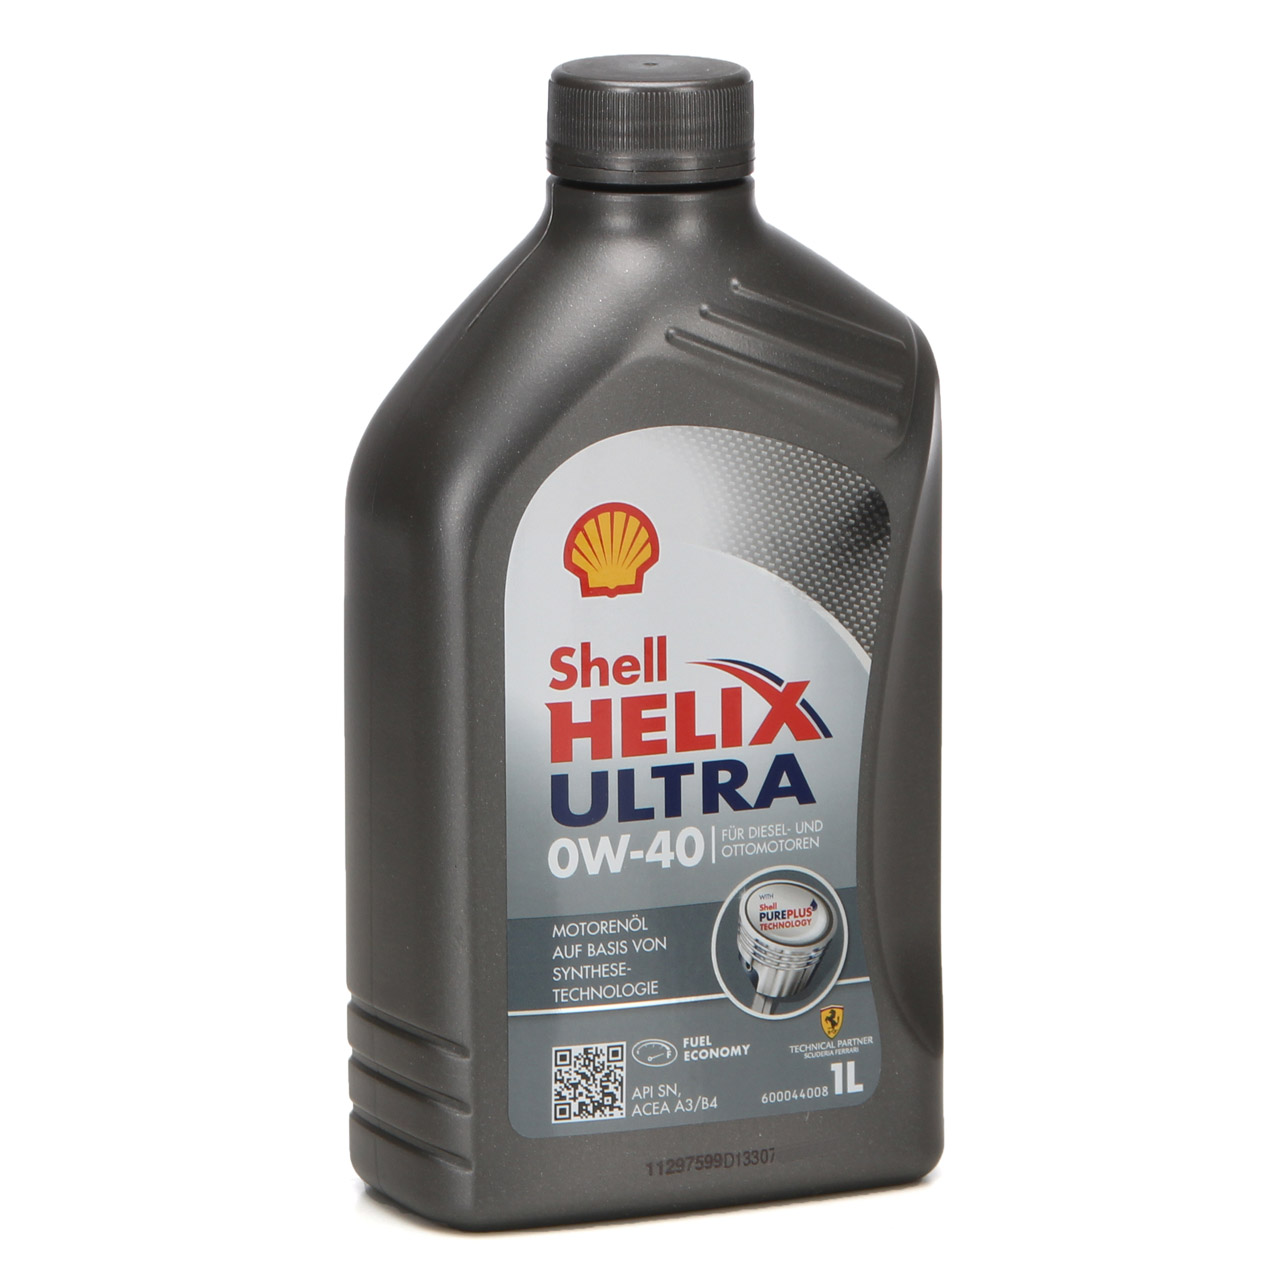 1L 1 Liter SHELL HELIX ULTRA 0W-40 Motoröl Öl MB 229.5/226.5 VW 502.00/505.00